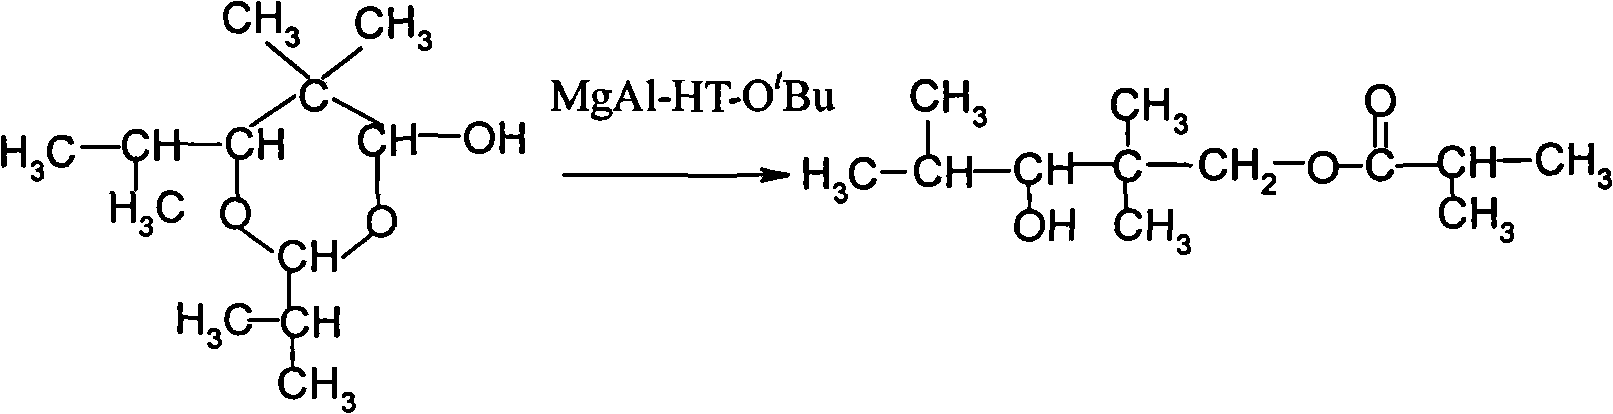 Method for preparing 2,2,4-trimethyl-1,3-pentanediol monoisobutyrate